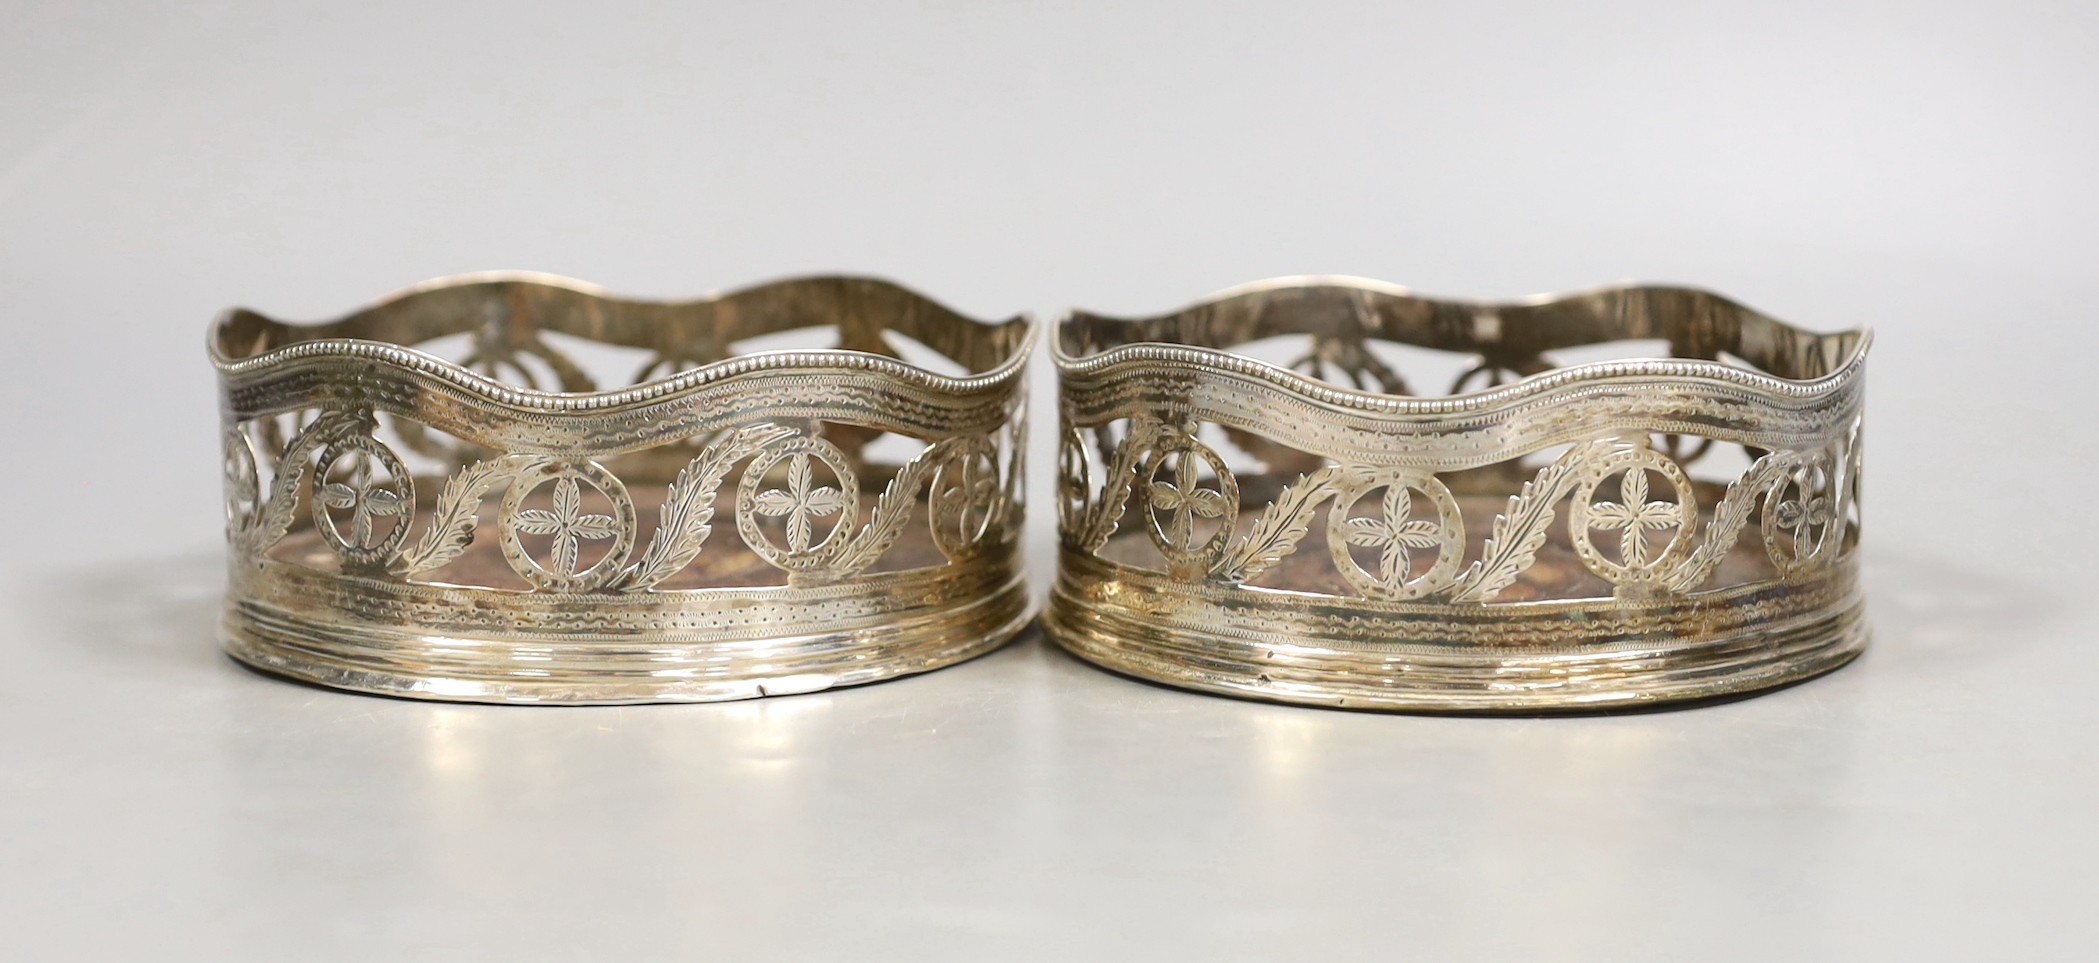 A pair of George III pierced silver wine coasters, maker's mark rubbed, London, 1787,diameter 12.8cm.